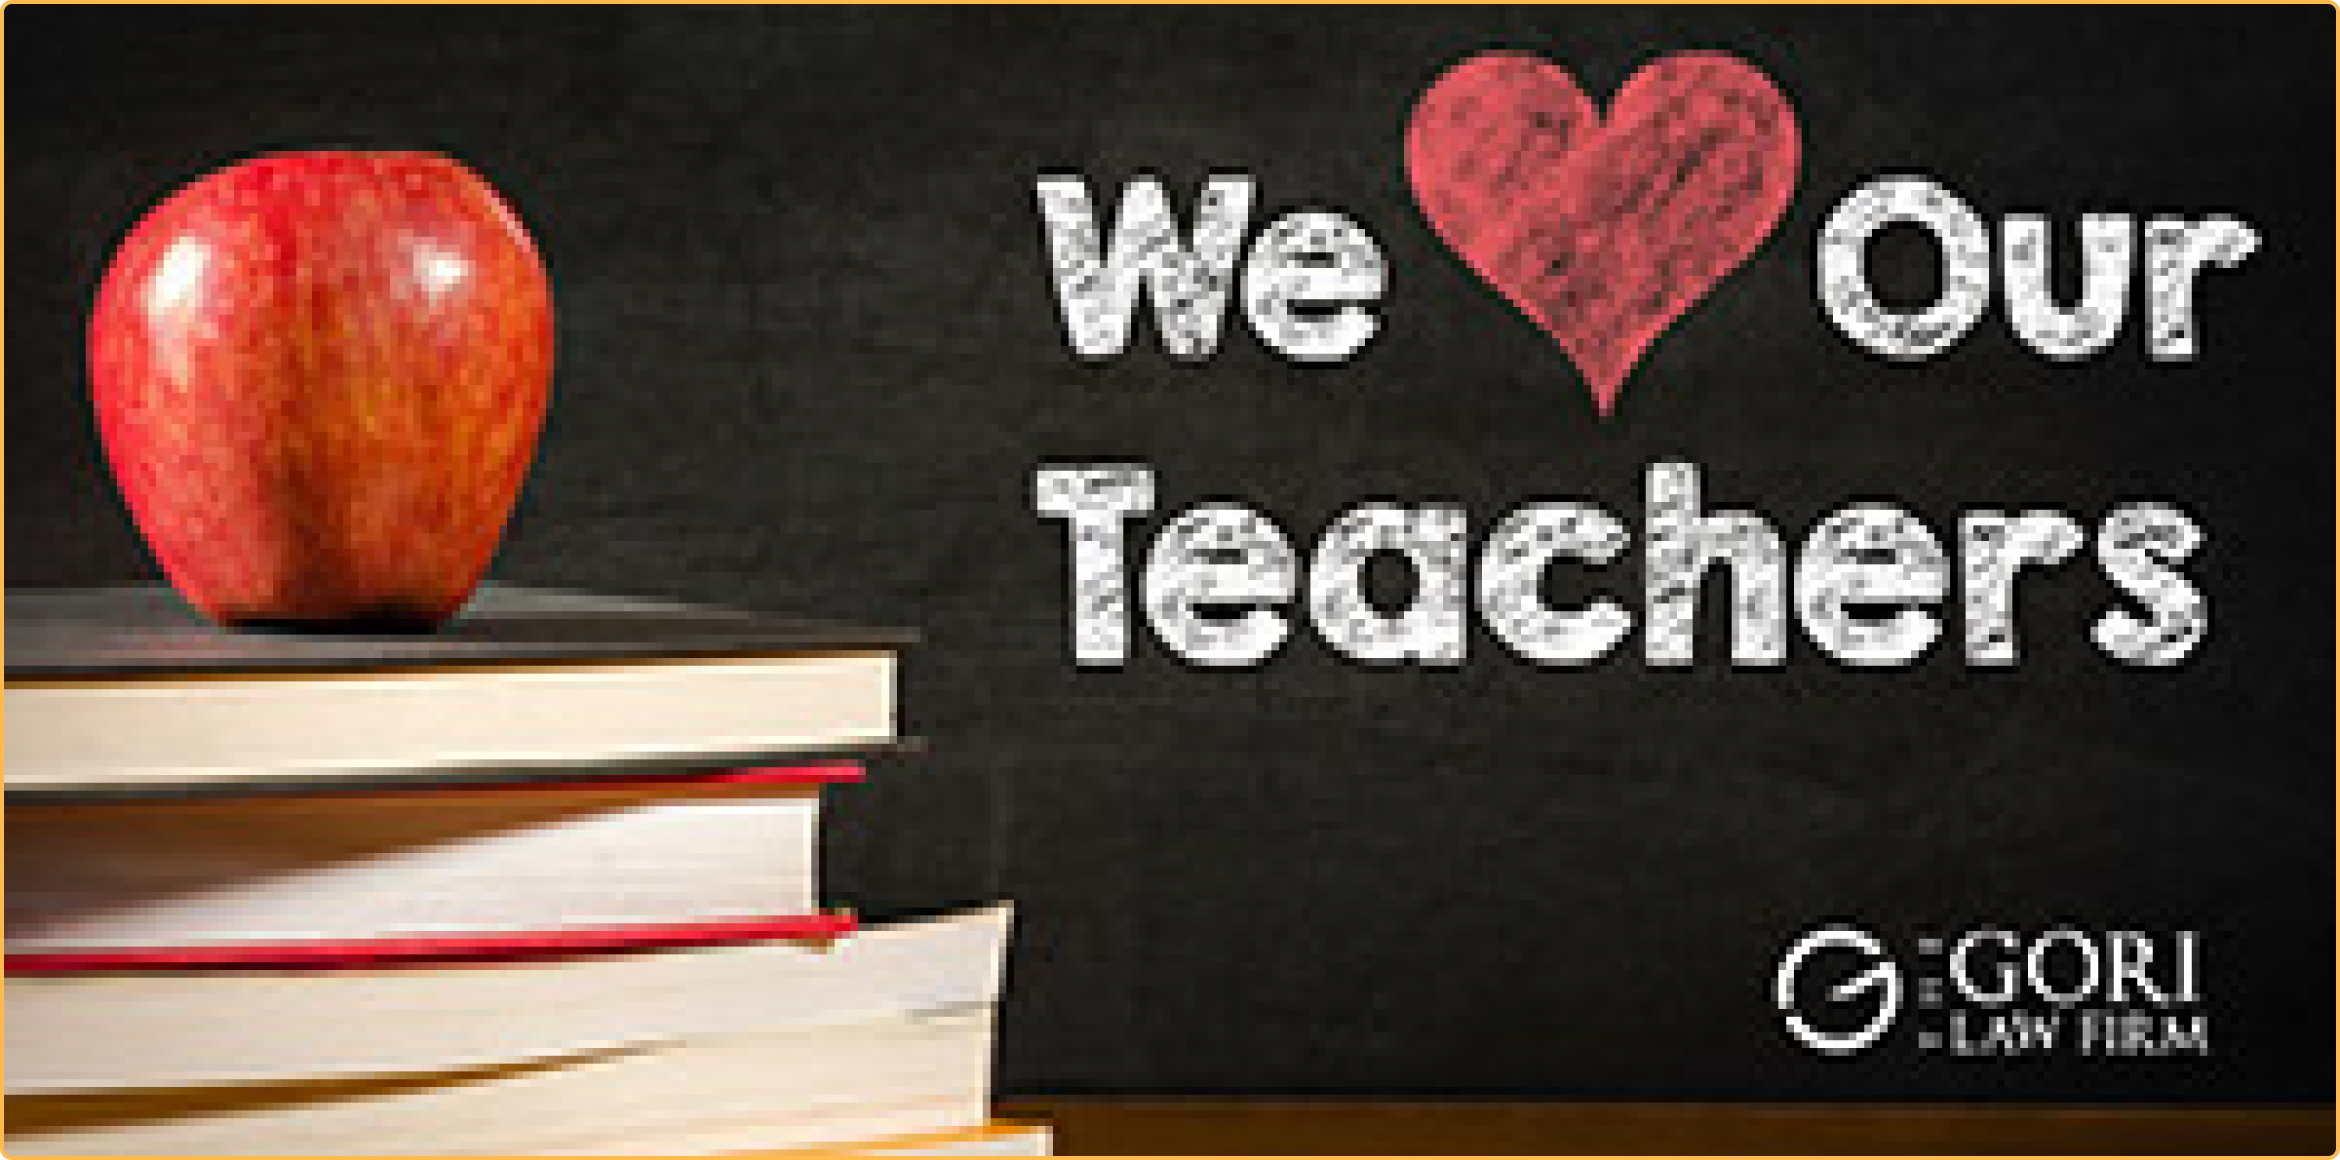 We love teachers image